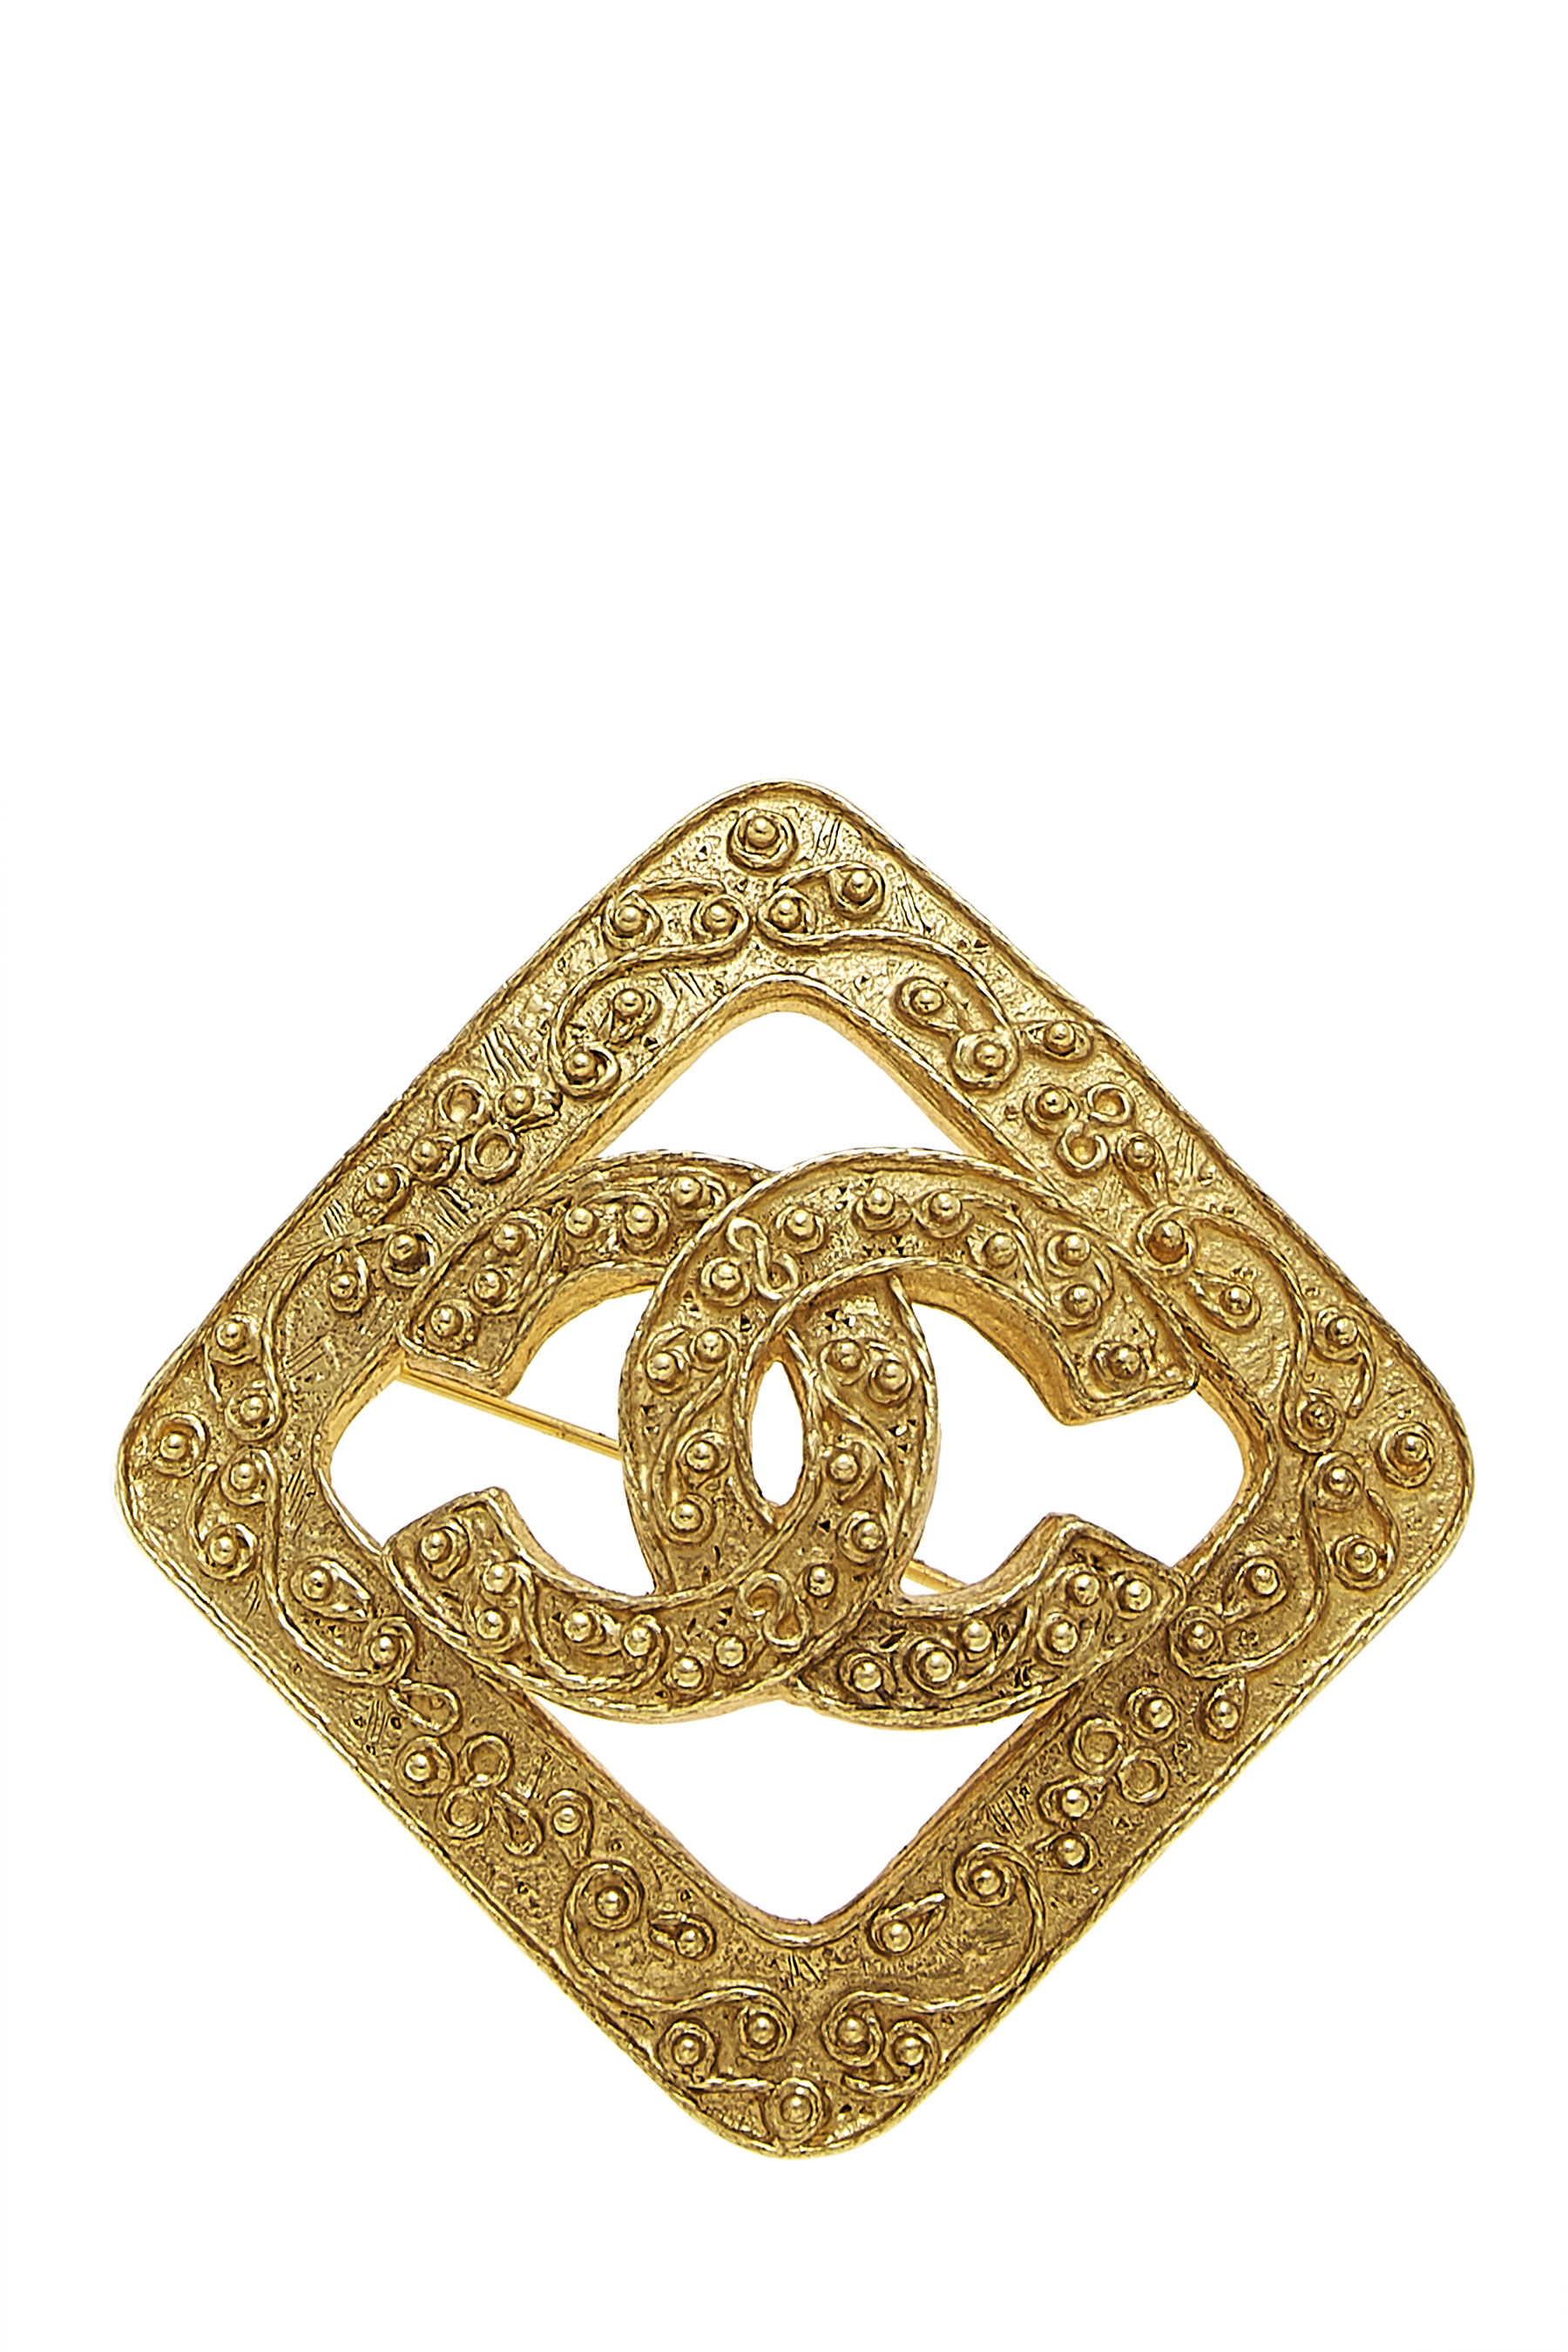 Chanel - Gold Filigree 'CC' Pin